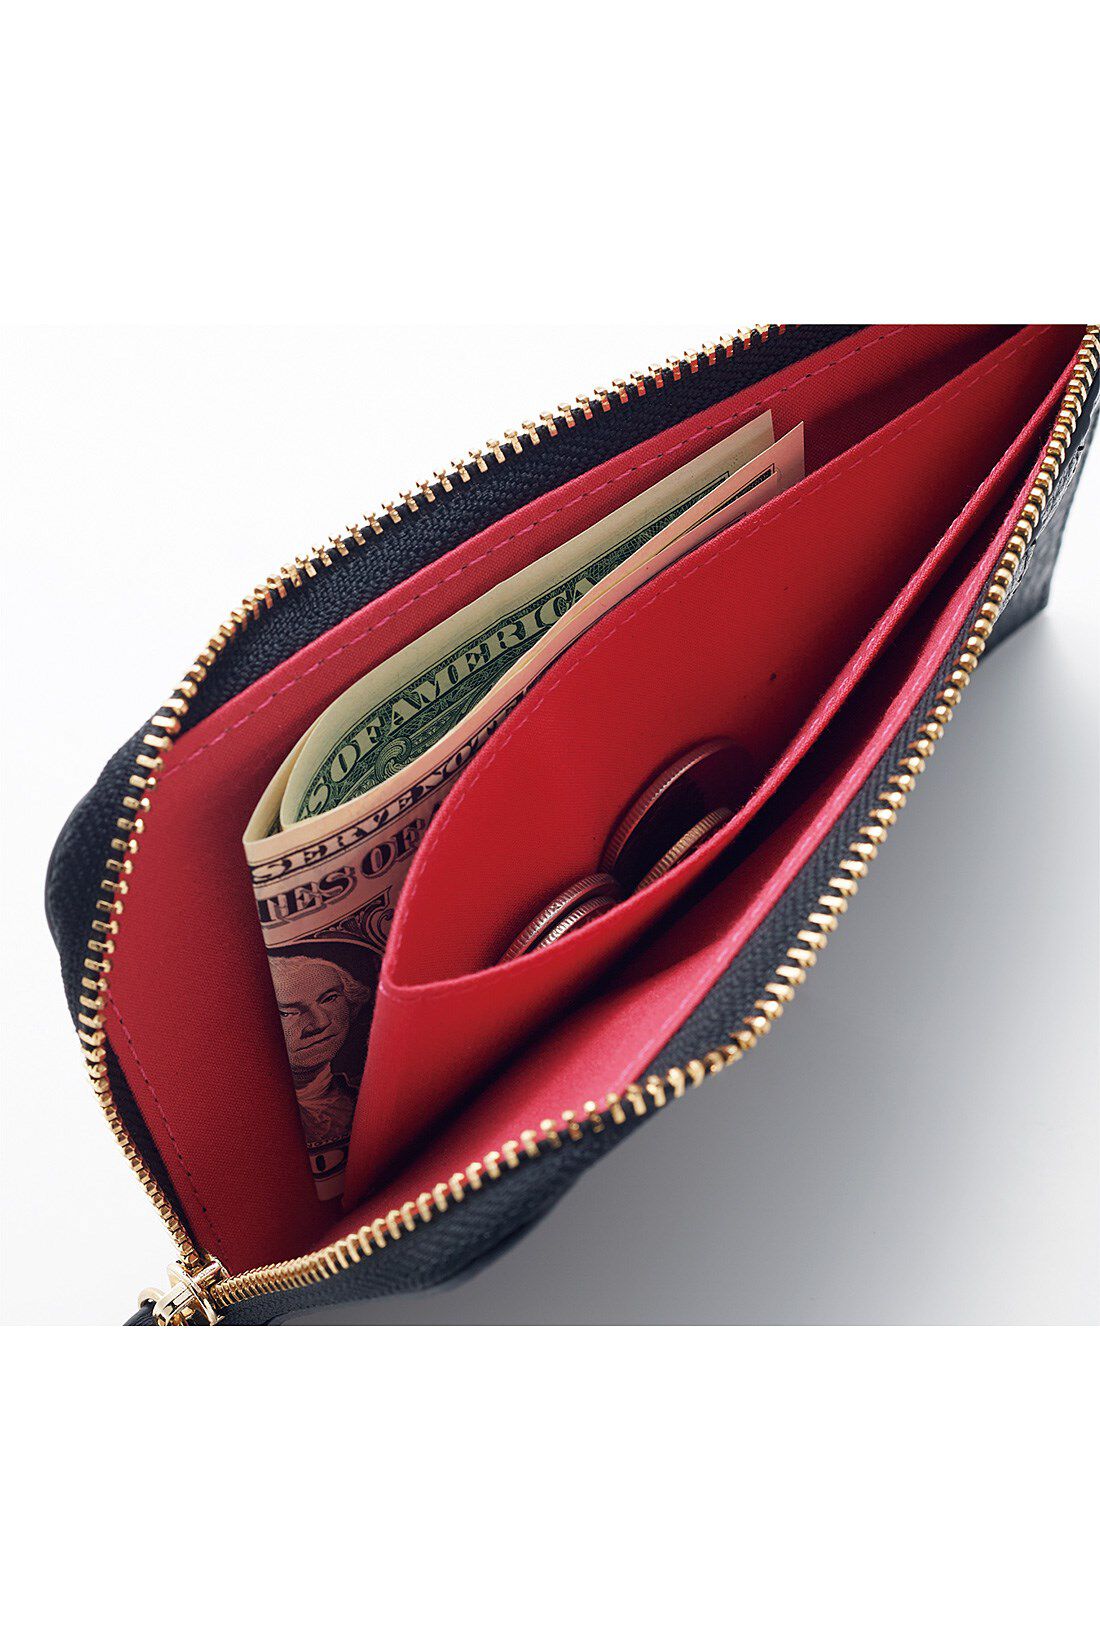 IEDIT|IEDIT[イディット]　本革が大人にうれしい スターエンボス加工のスリムミニ財布〈ブラック〉　|中が見やすい明るめピンクで気分も上がります。